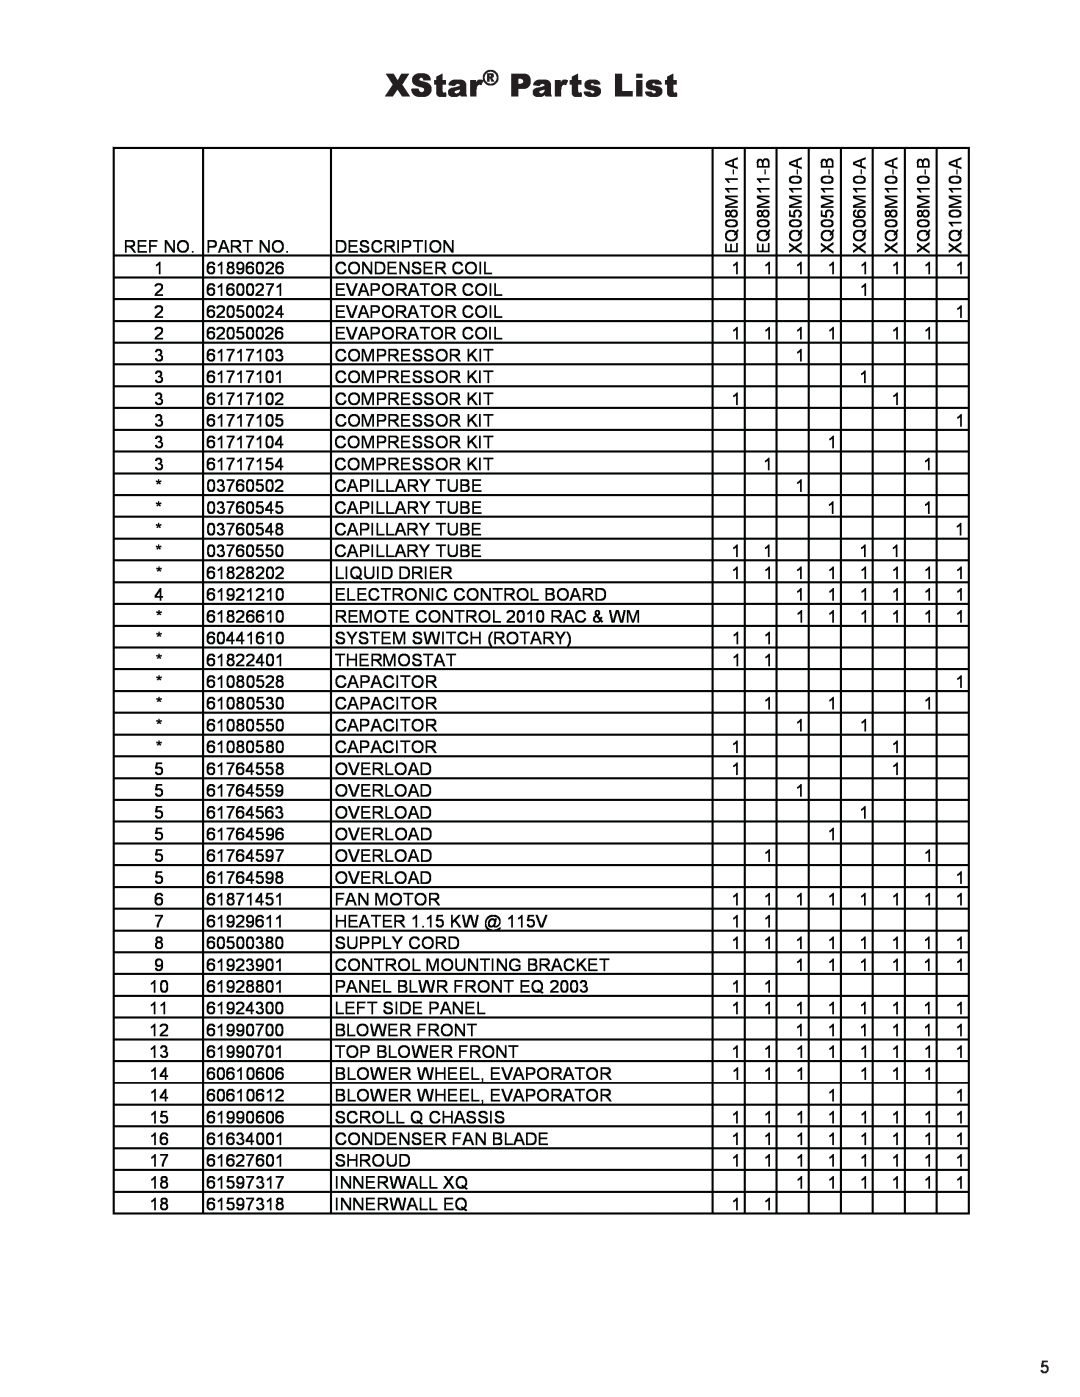 Friedrich R-410A manual XStar Parts List 